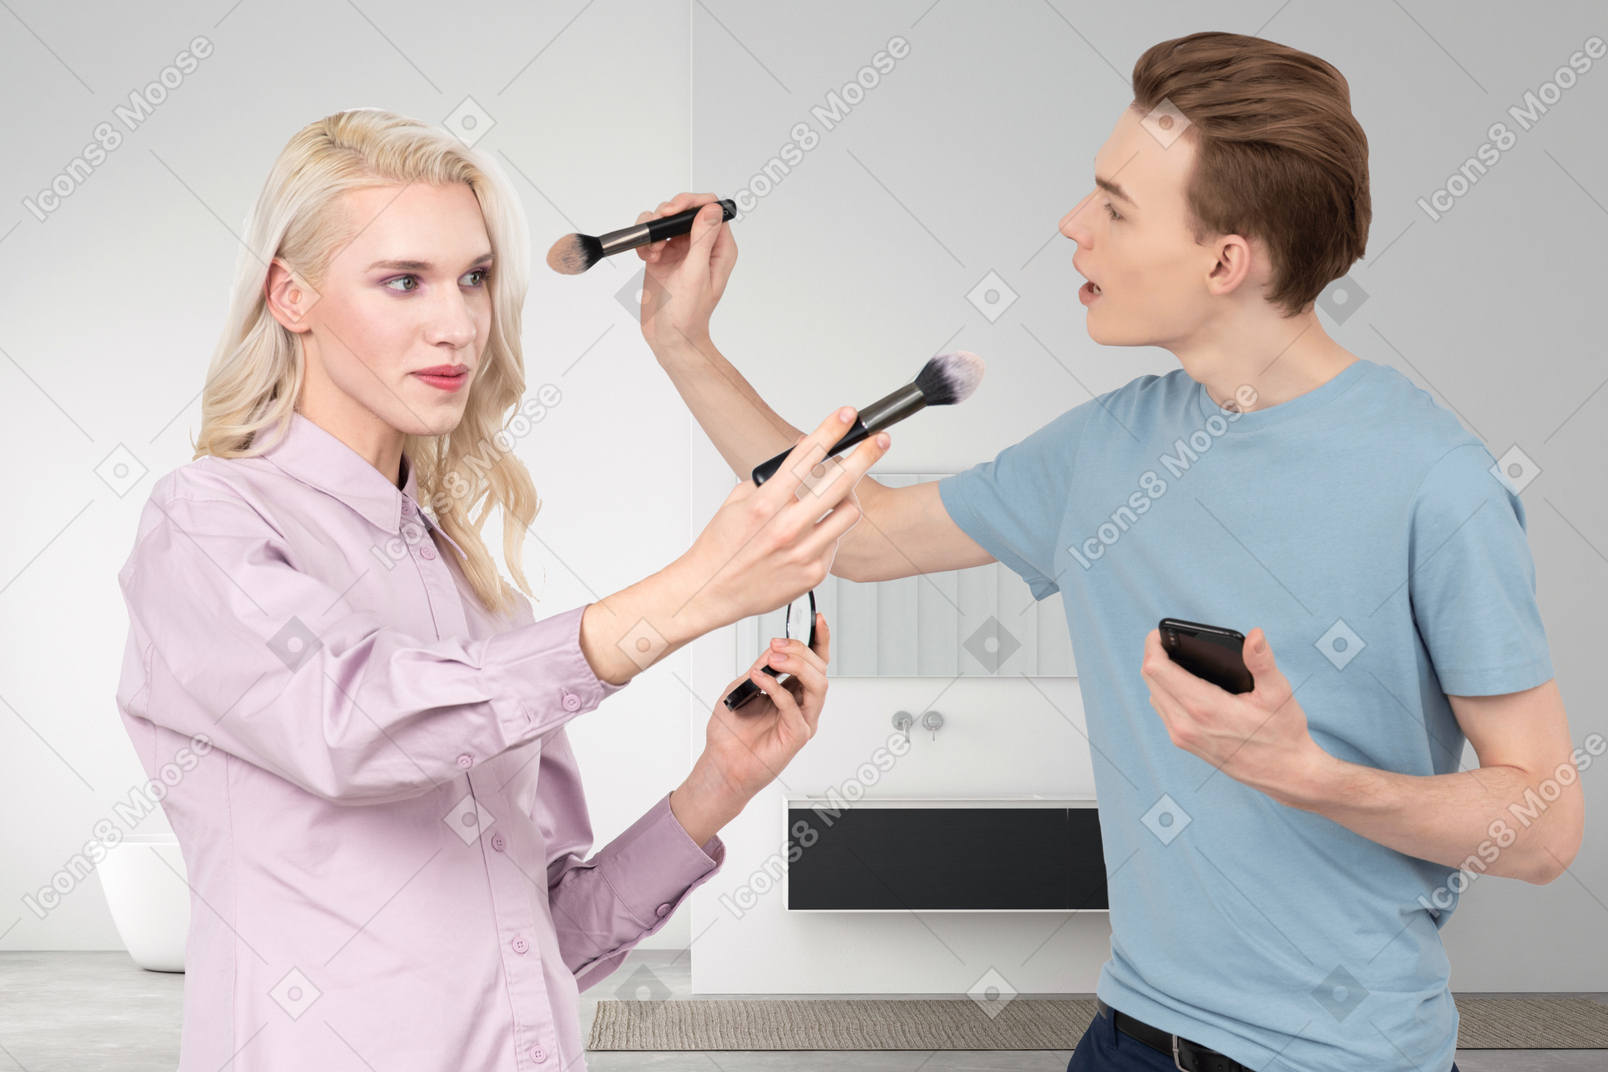 Männer schminken sich gegenseitig